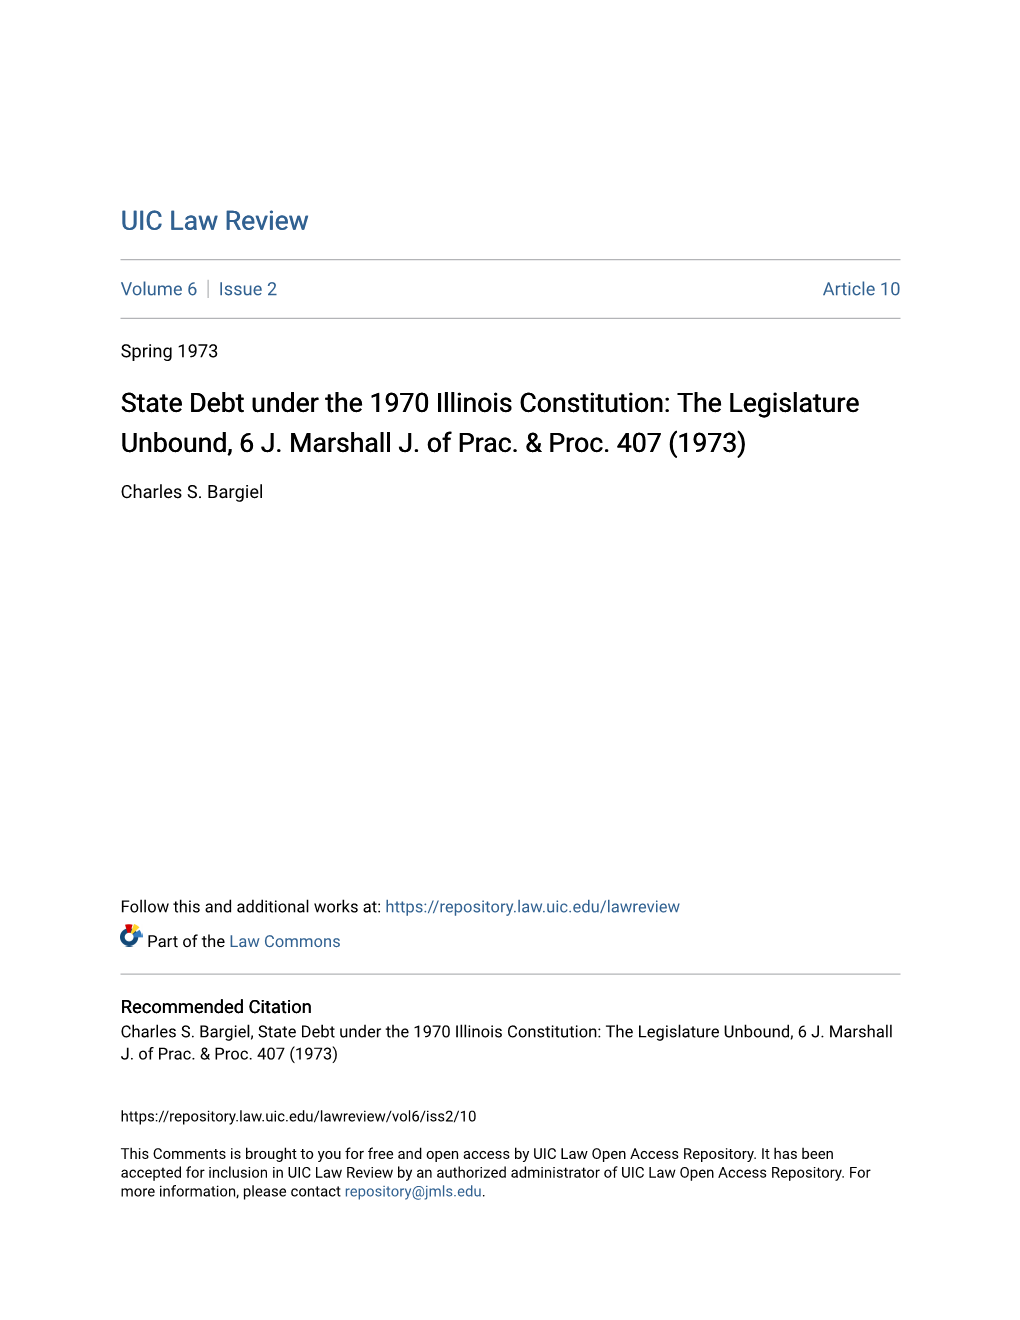 State Debt Under the 1970 Illinois Constitution: the Legislature Unbound, 6 J